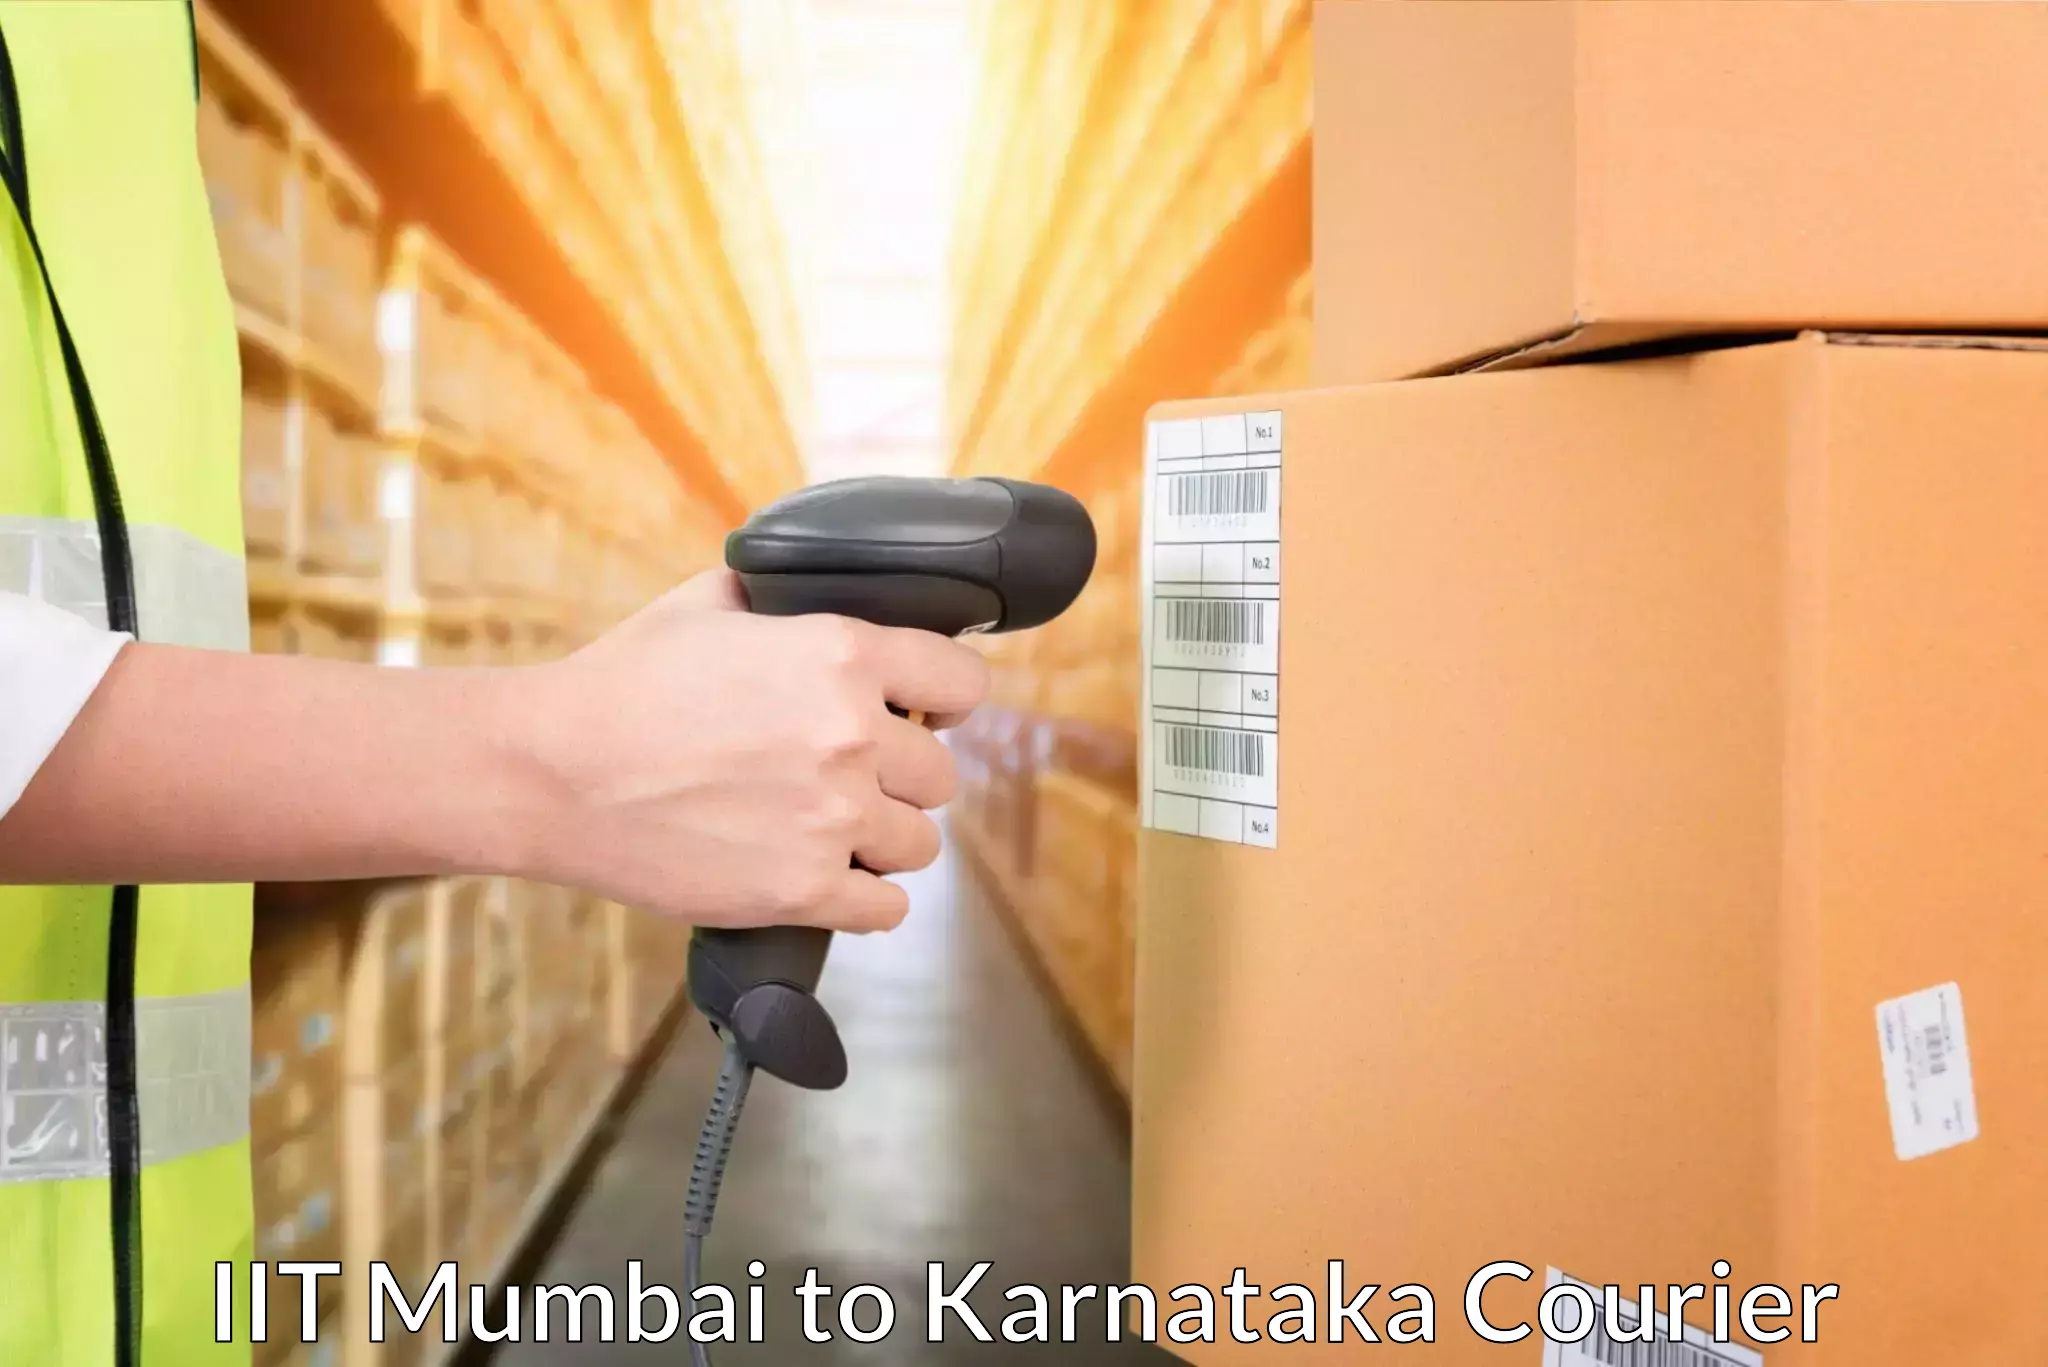 Courier service comparison IIT Mumbai to Kanjarakatte